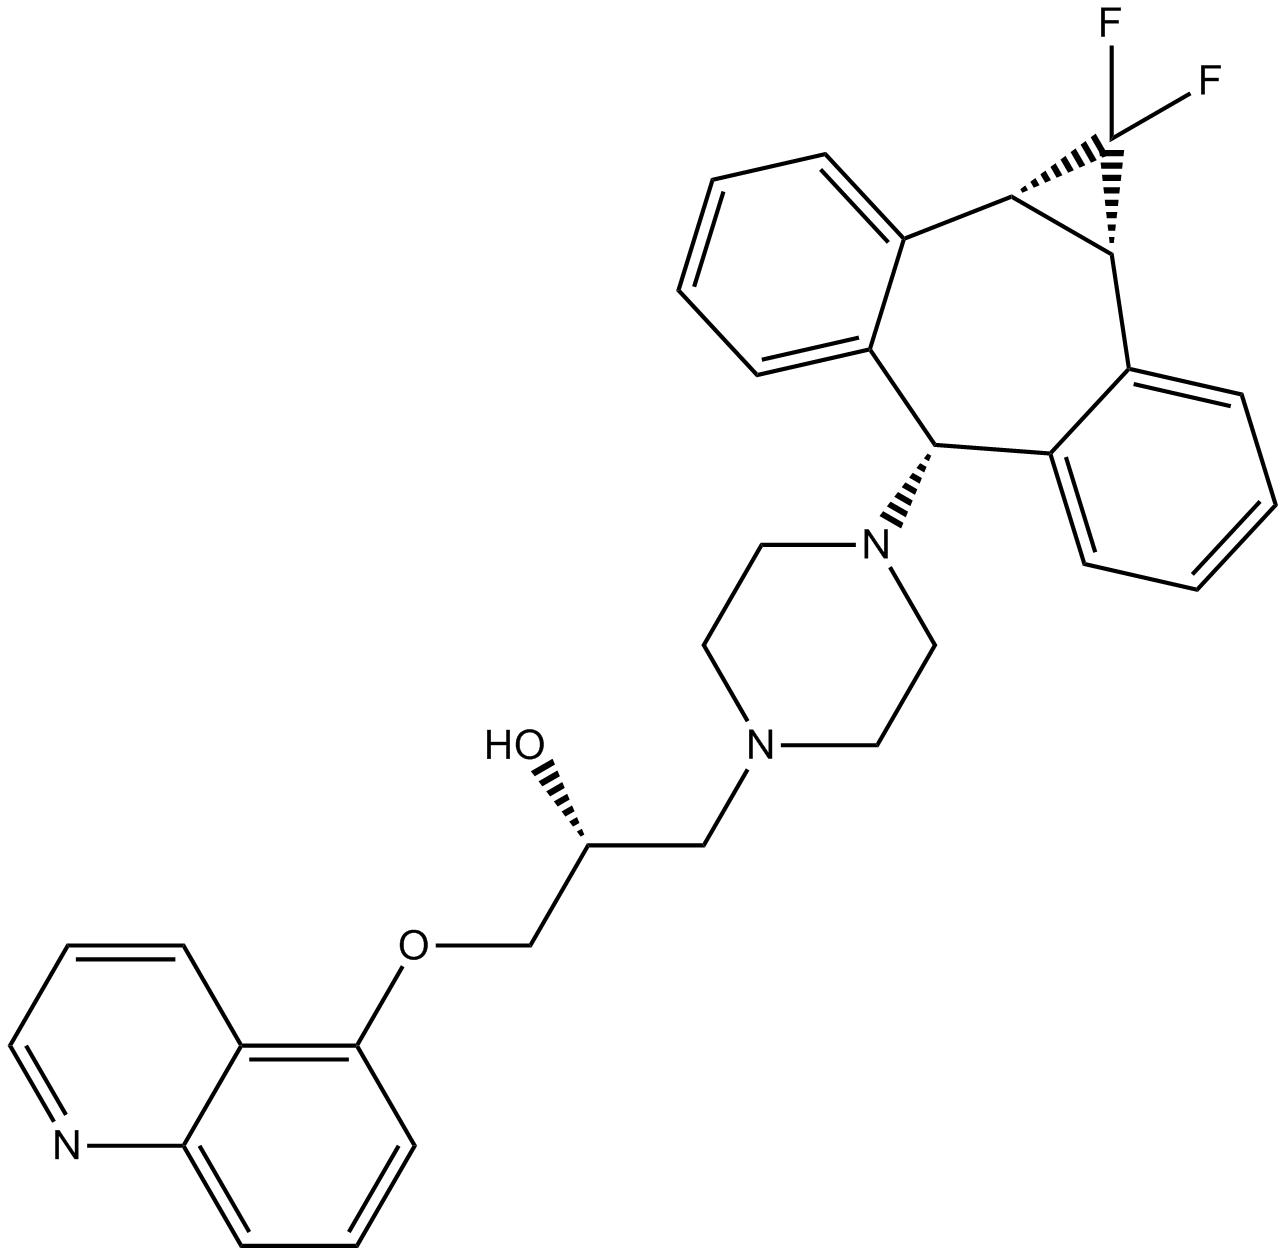 APExBIO - LY335979 (Zosuquidar 3HCL)|Pgp (P-glycoprotein 